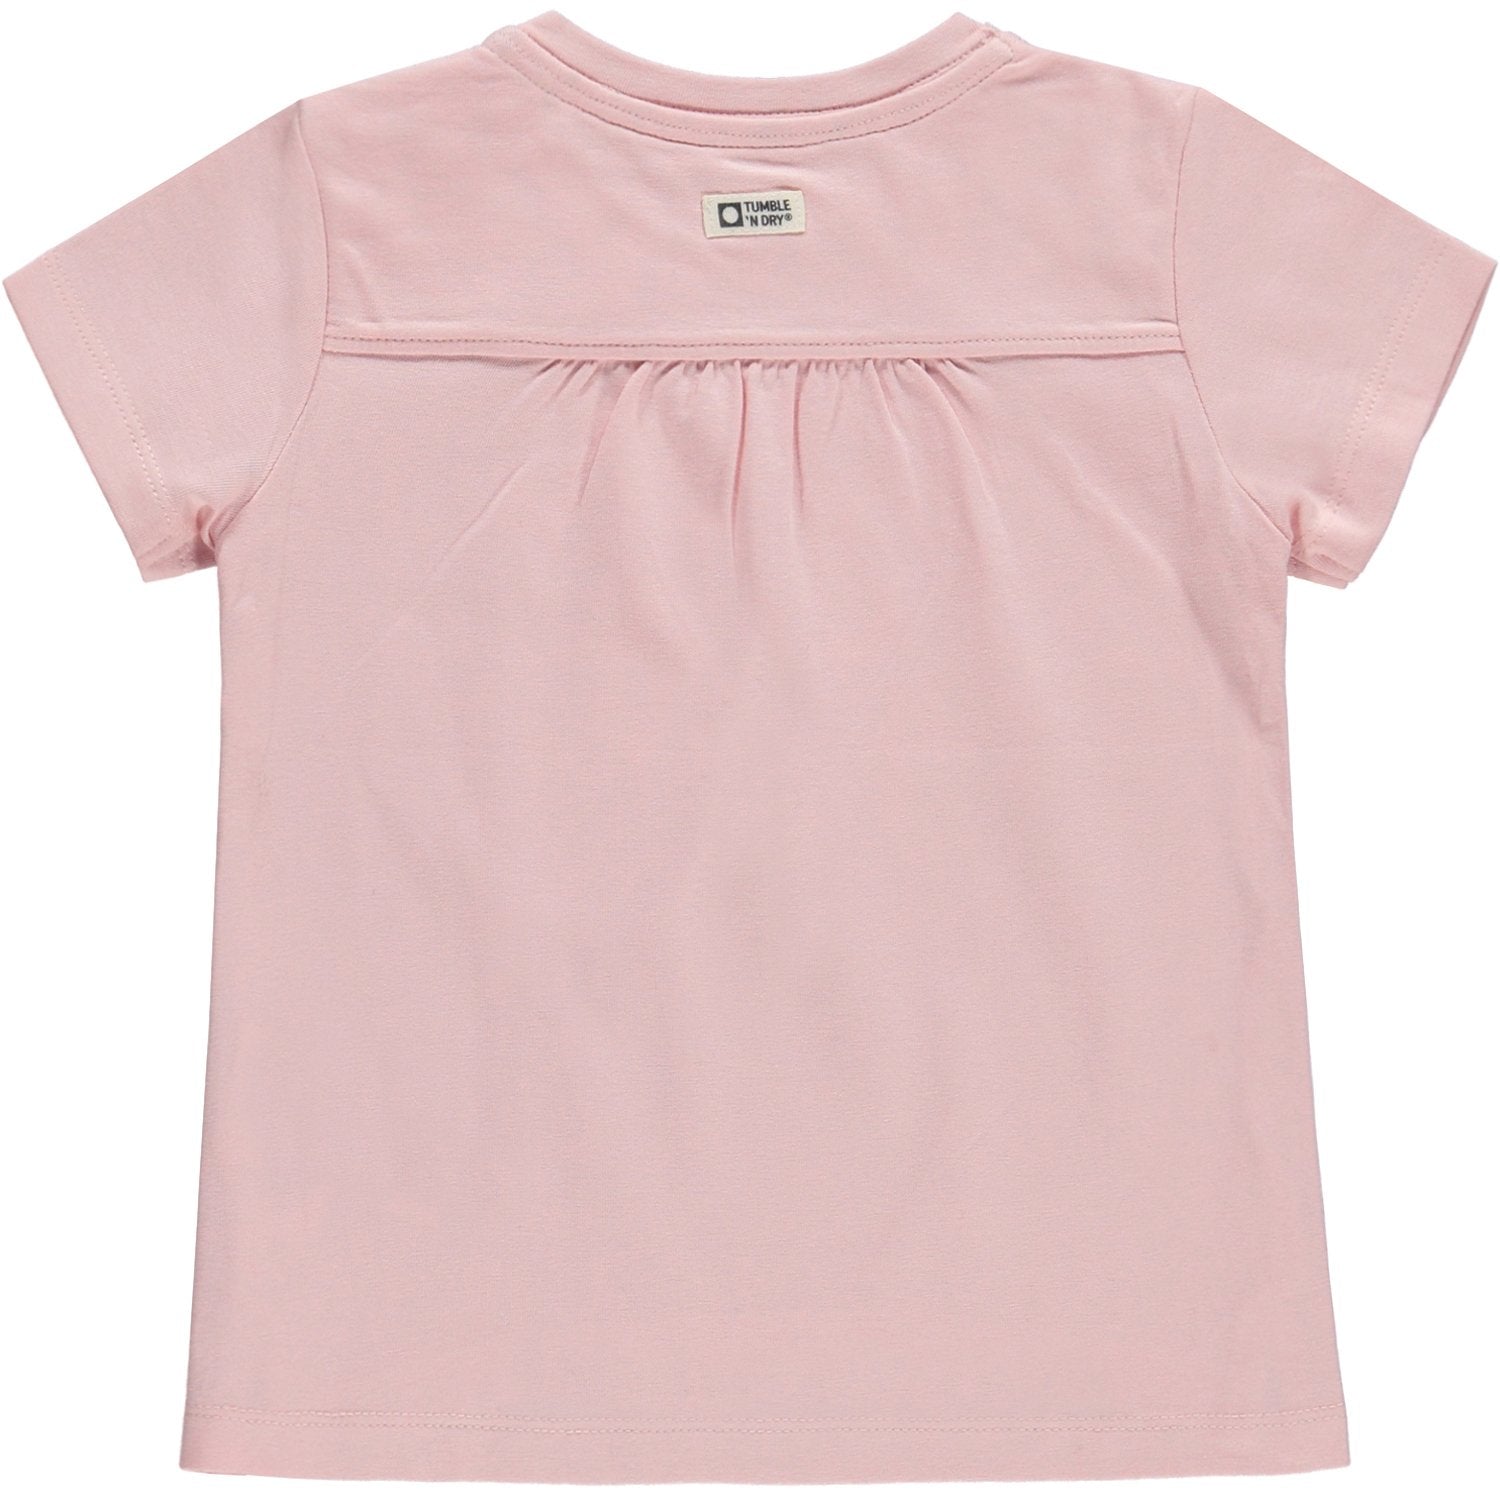 Baby Meisjes T-shirt Km O-hals van Tumble 'n Dry in de kleur Peachskin in maat 86.